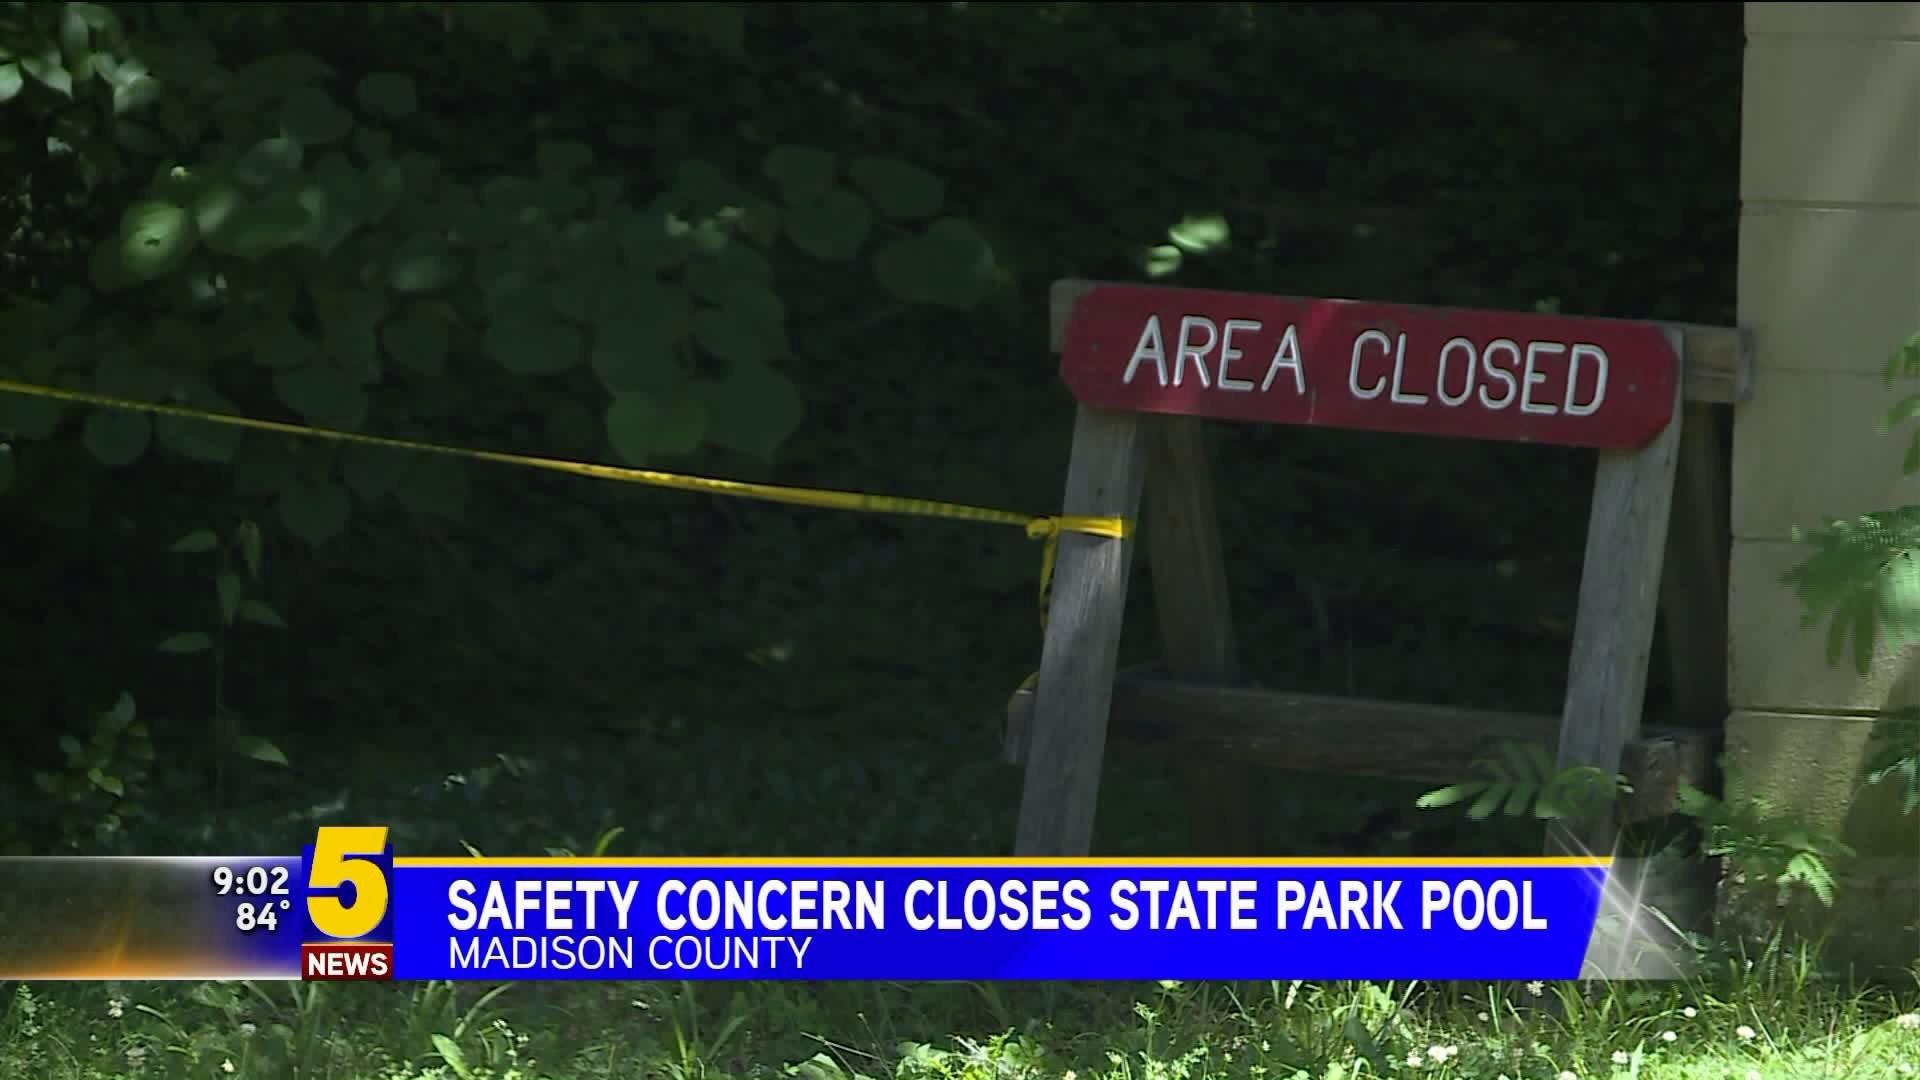 State Park Seimming Pool Closed